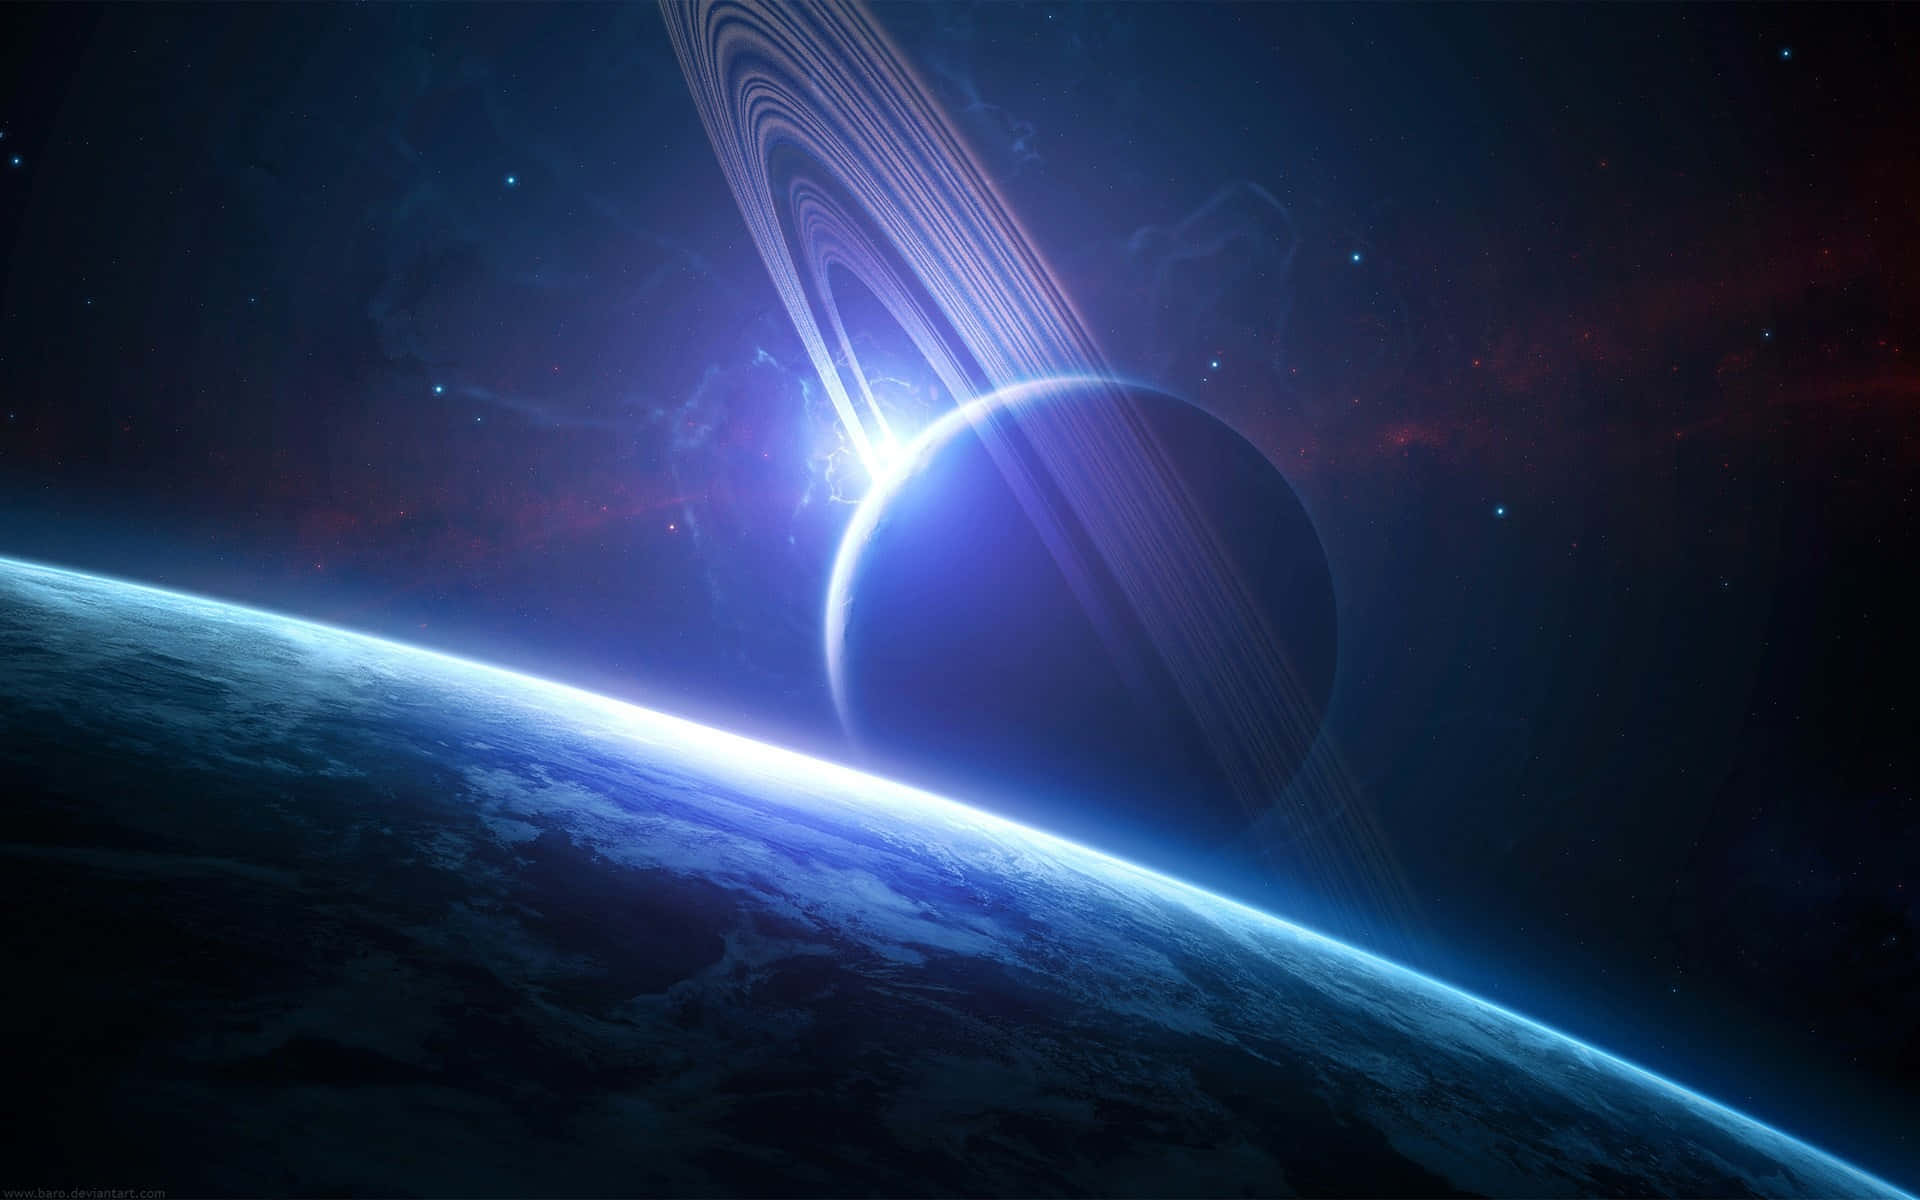 Rings of Saturn Illuminated Against the Cosmos